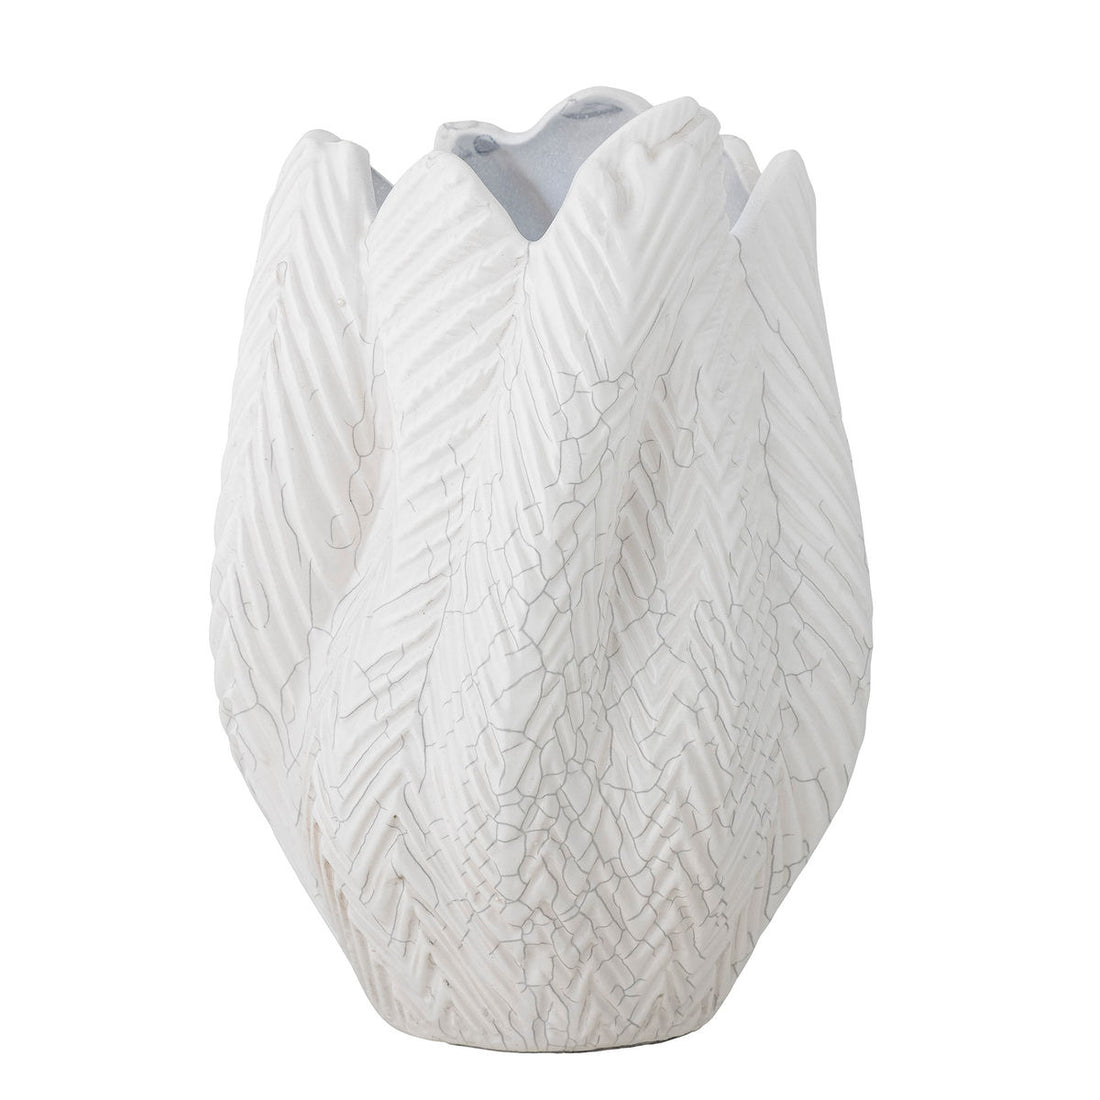 Creative Collection Besa Vase, White, Stoneware